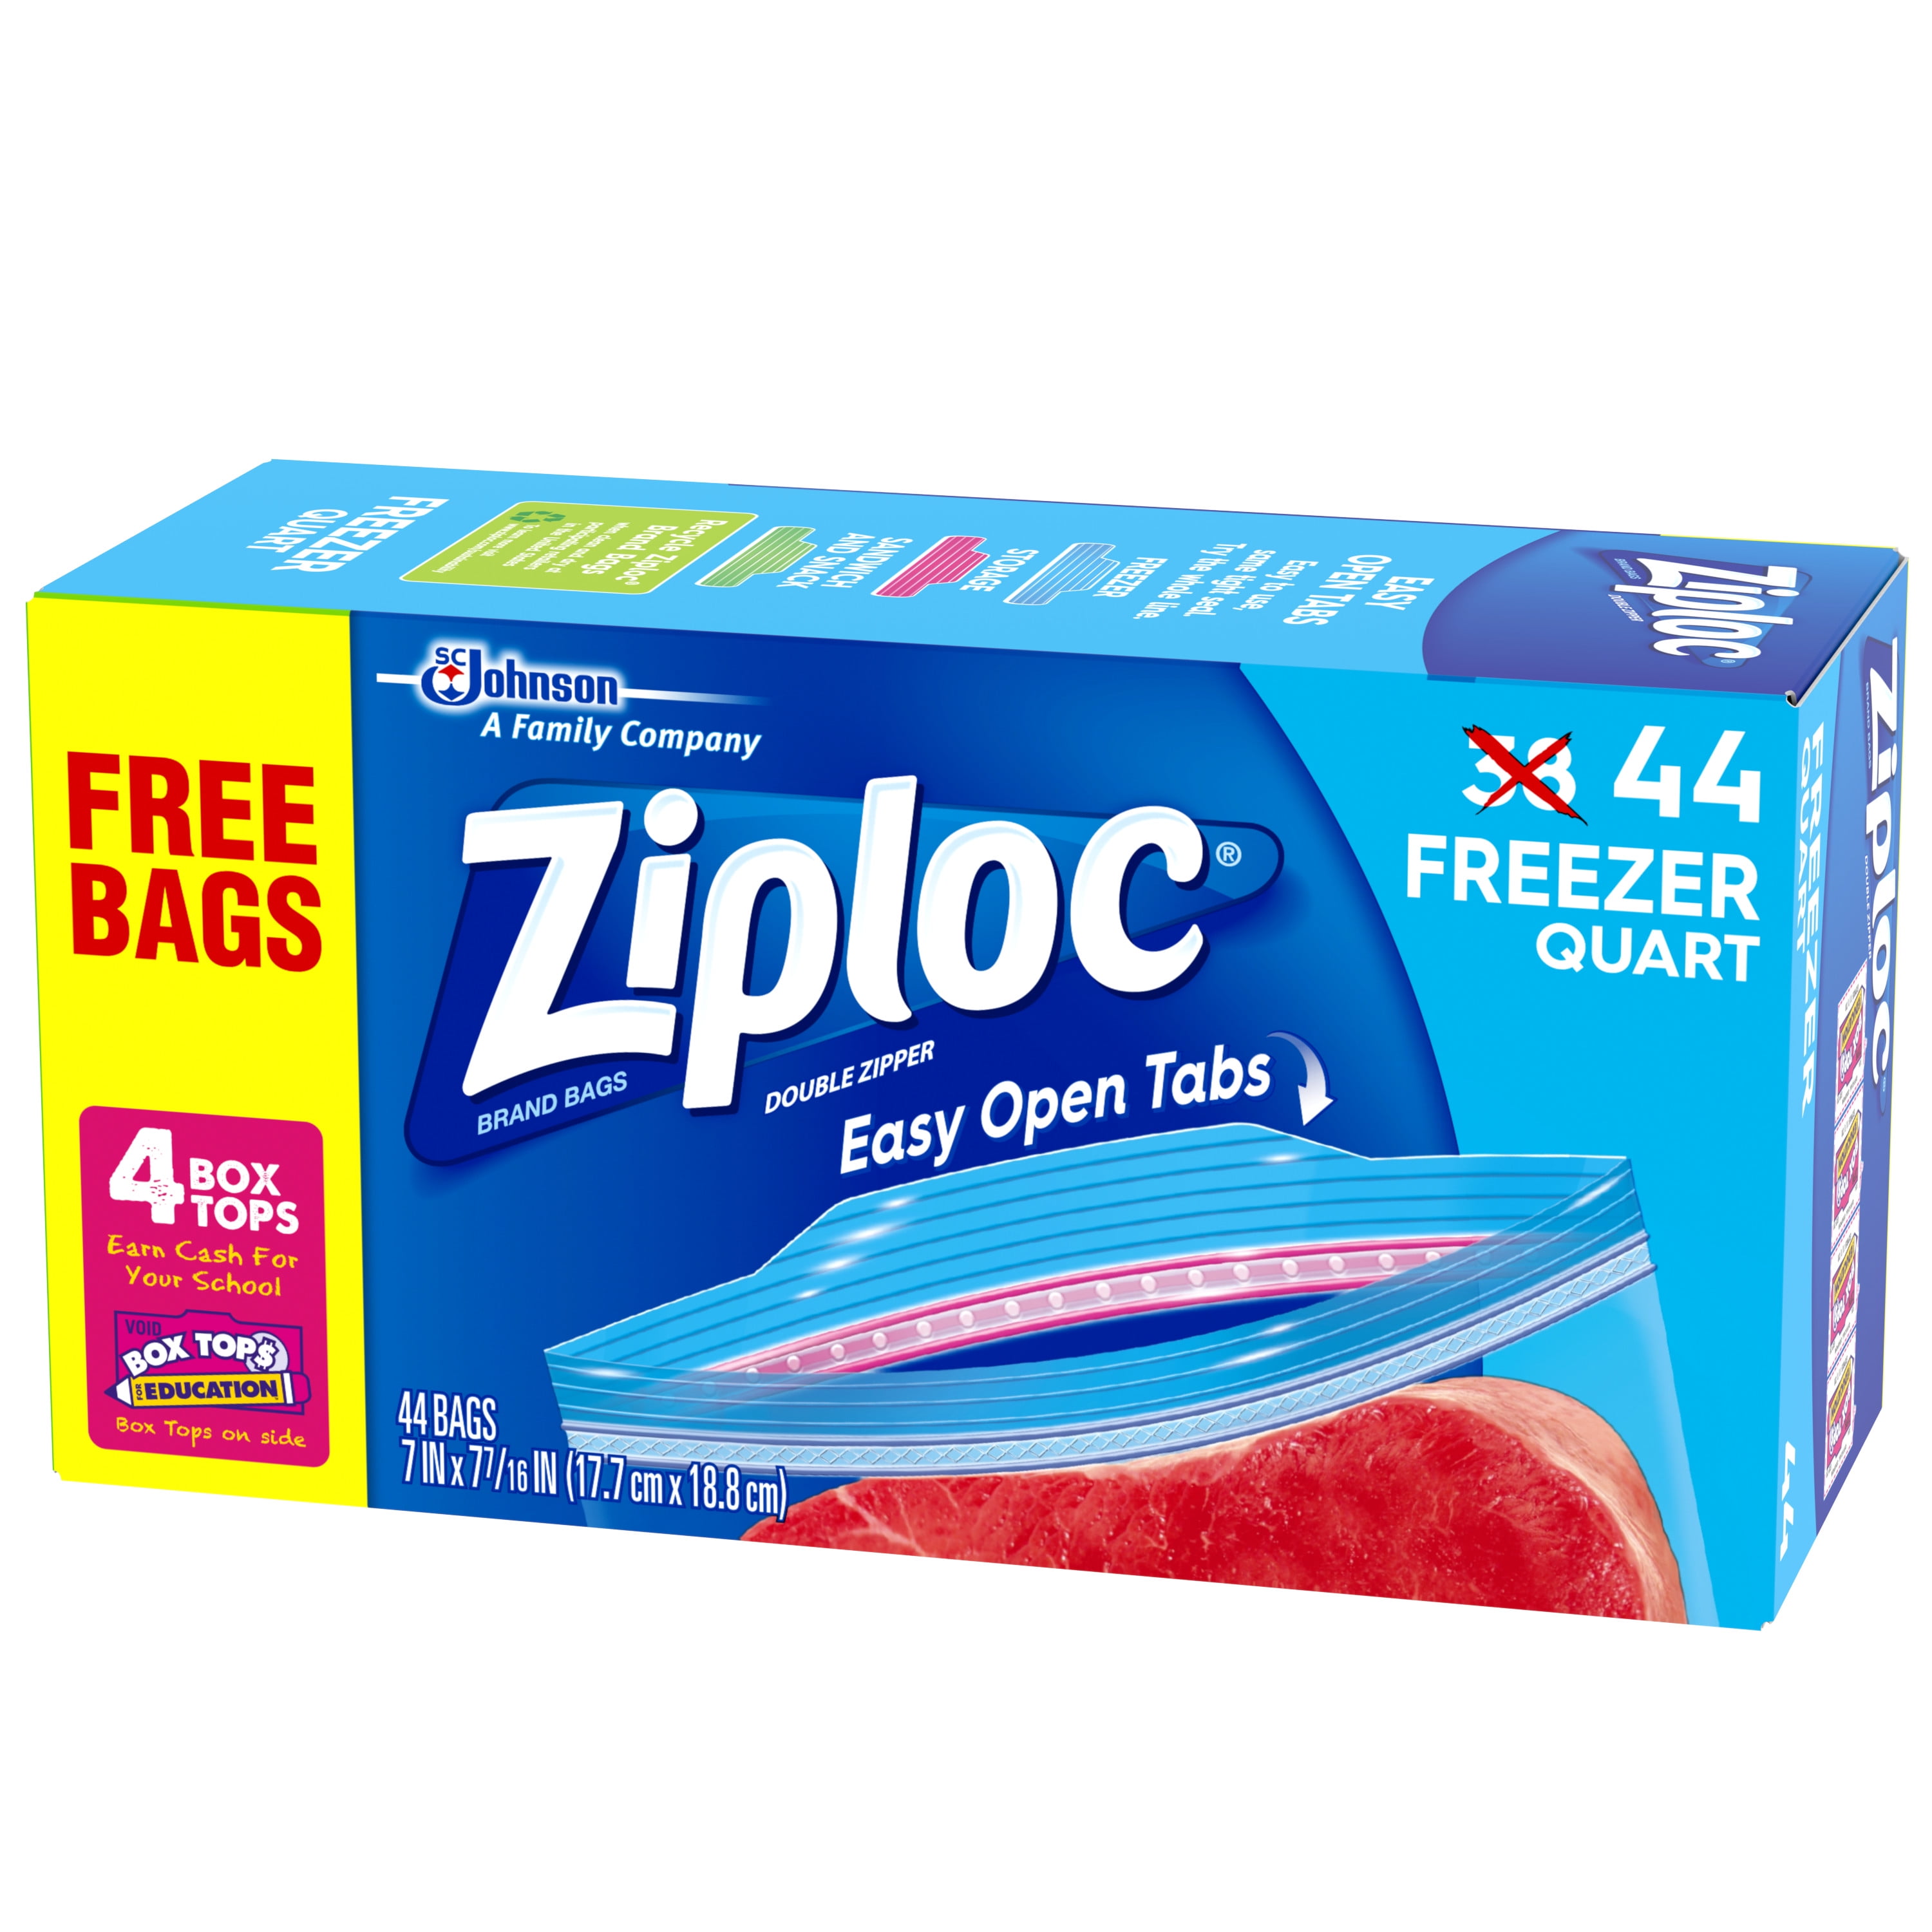 Ziploc Freezer Bags Double Zipper Quart - 19 ct box